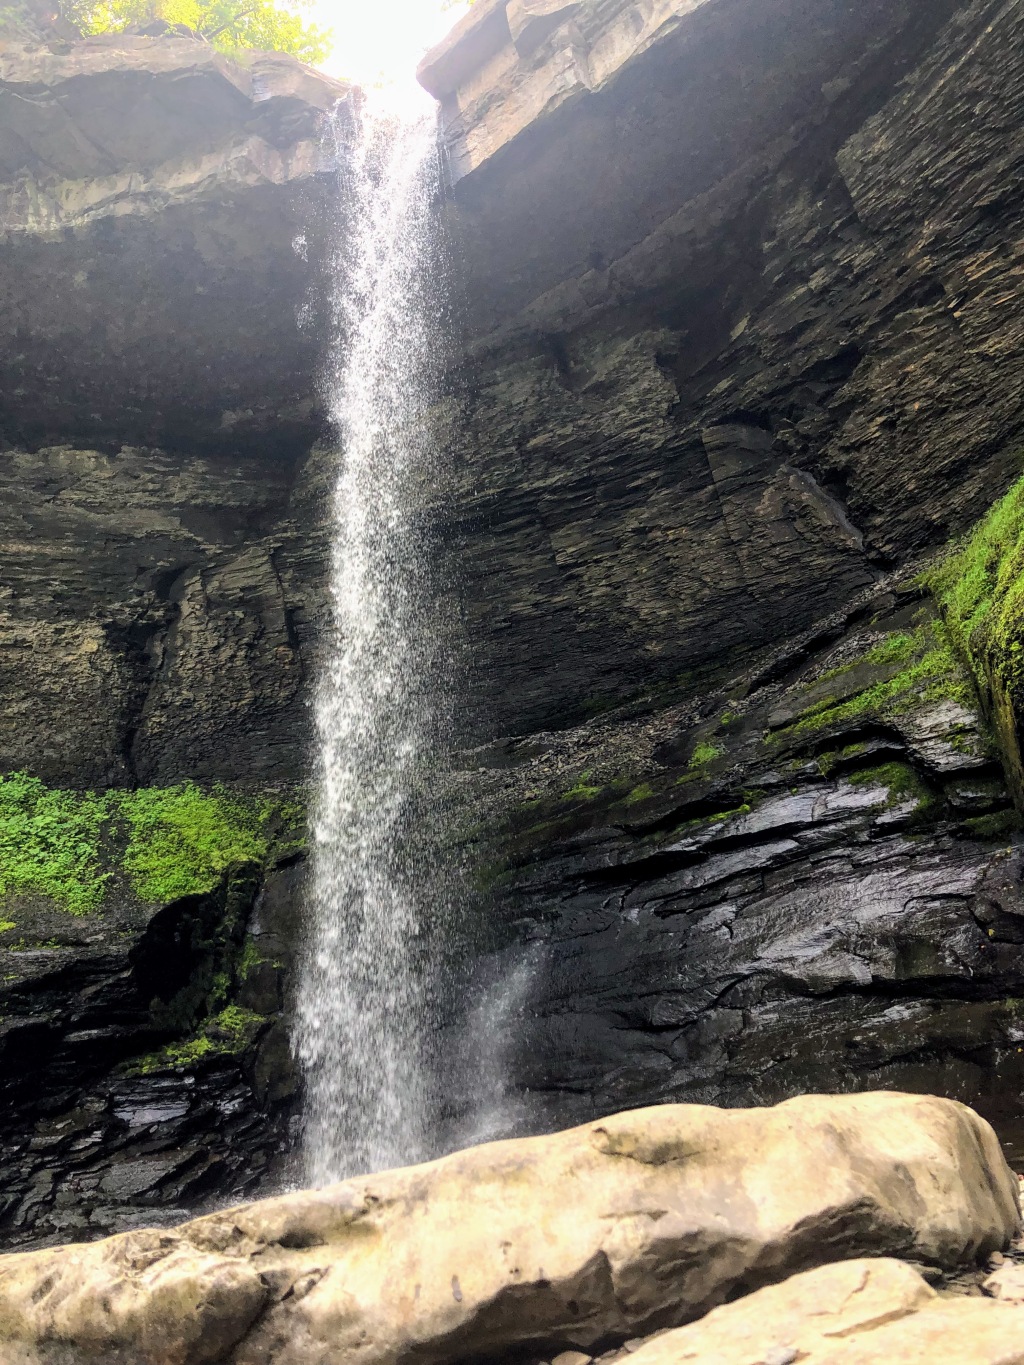 Day Trip to Carpenter Falls in Skaneateles, NY